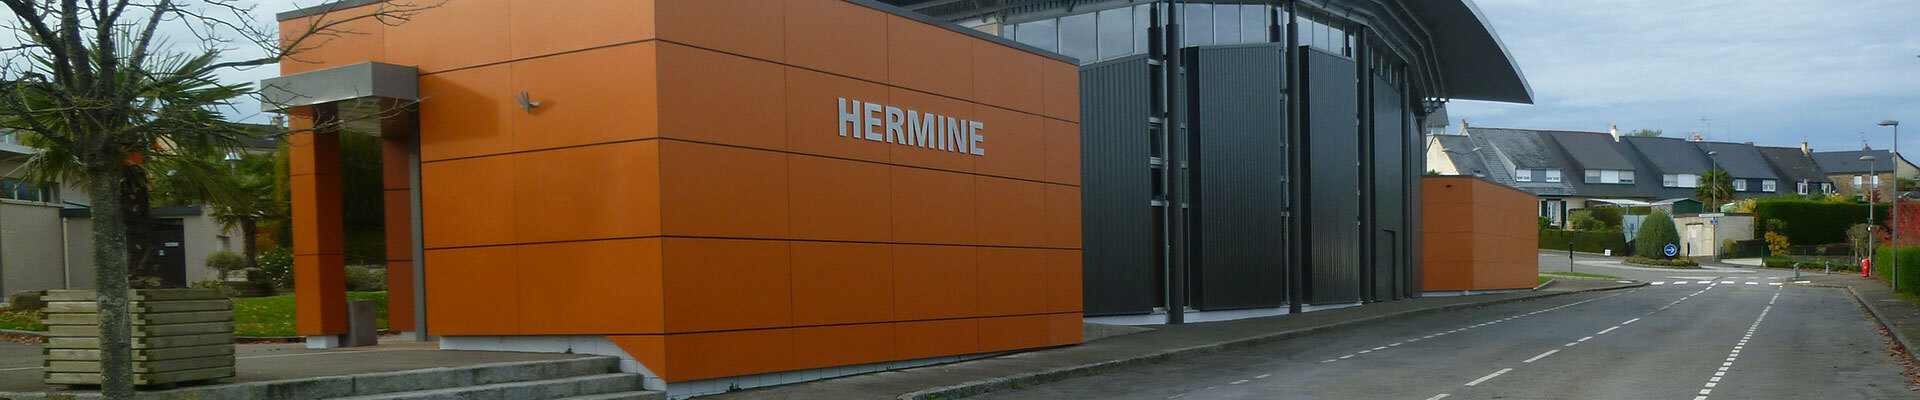 Diapo - salle Hermine